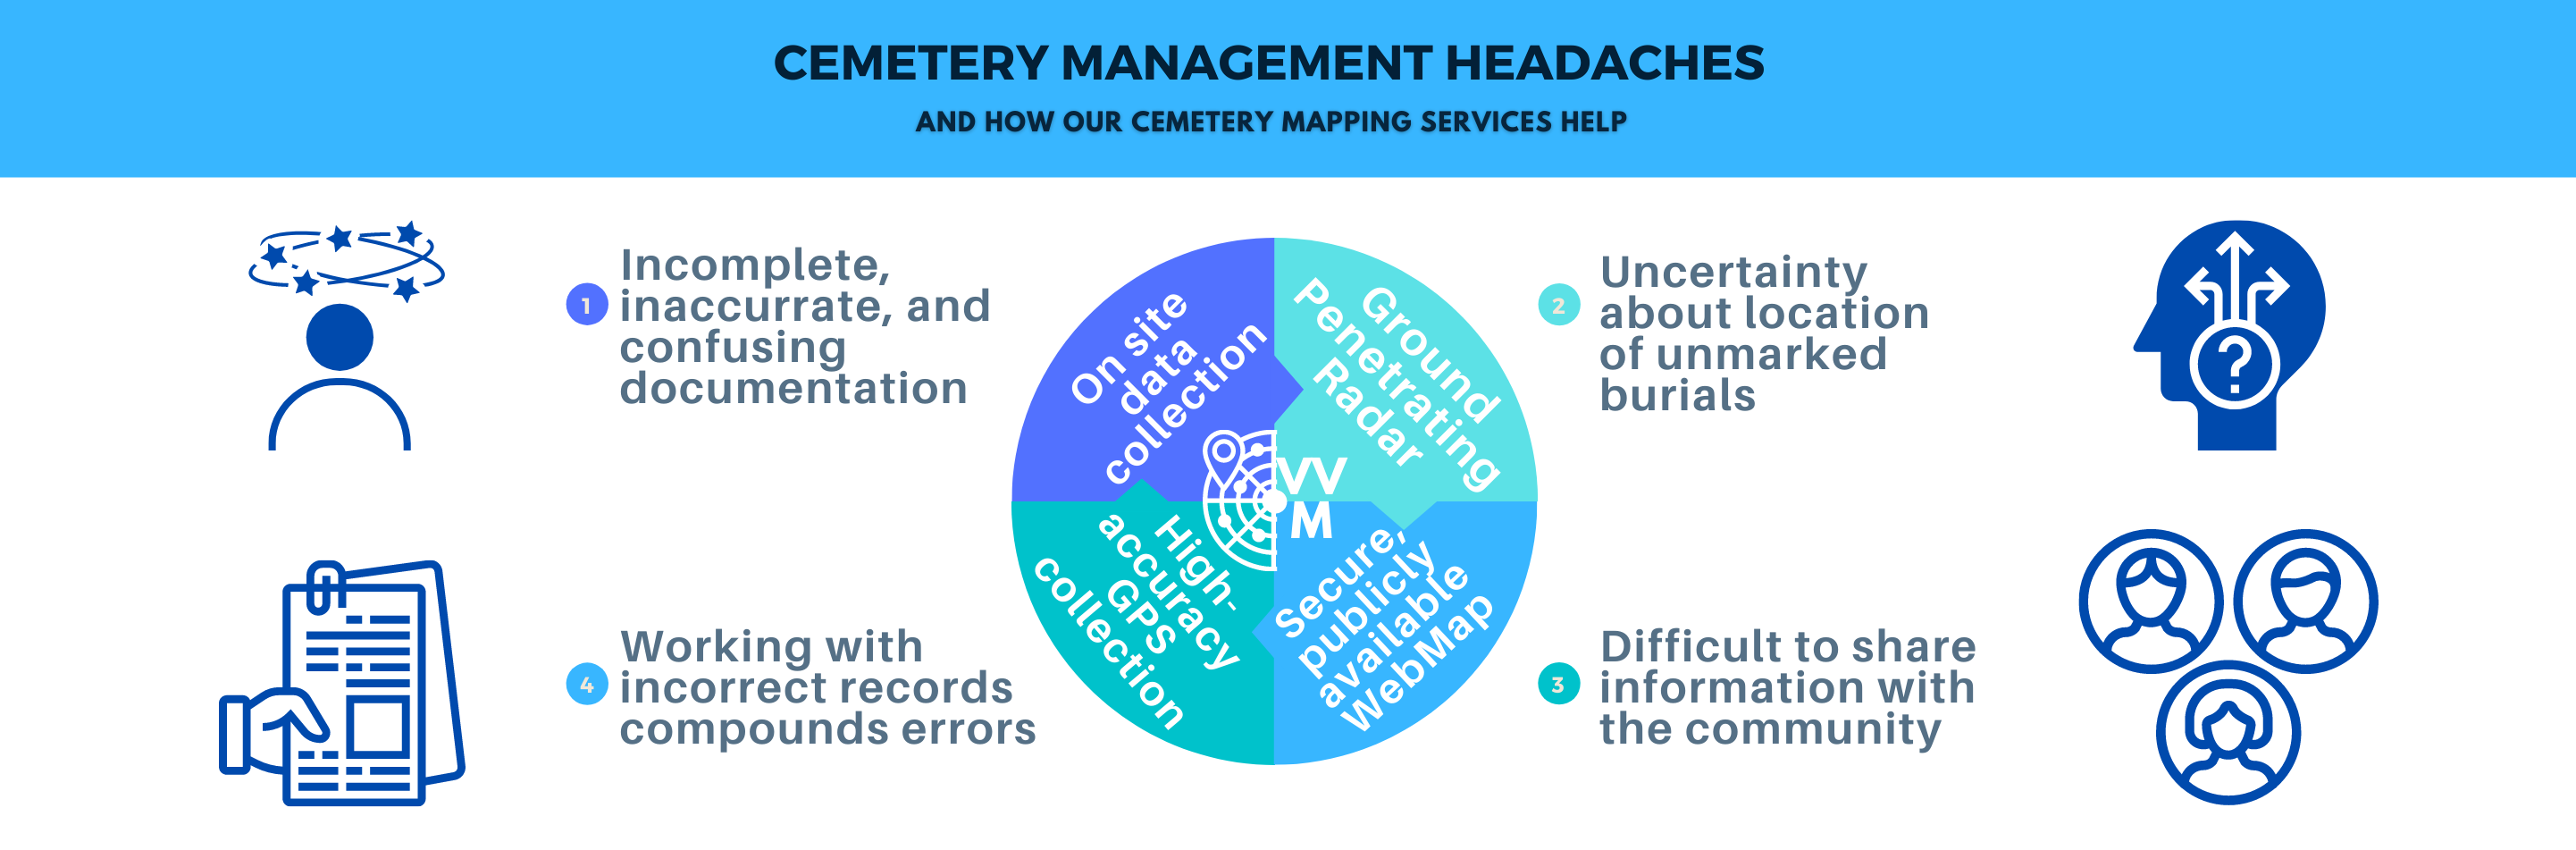 Cemetery Management Headaches